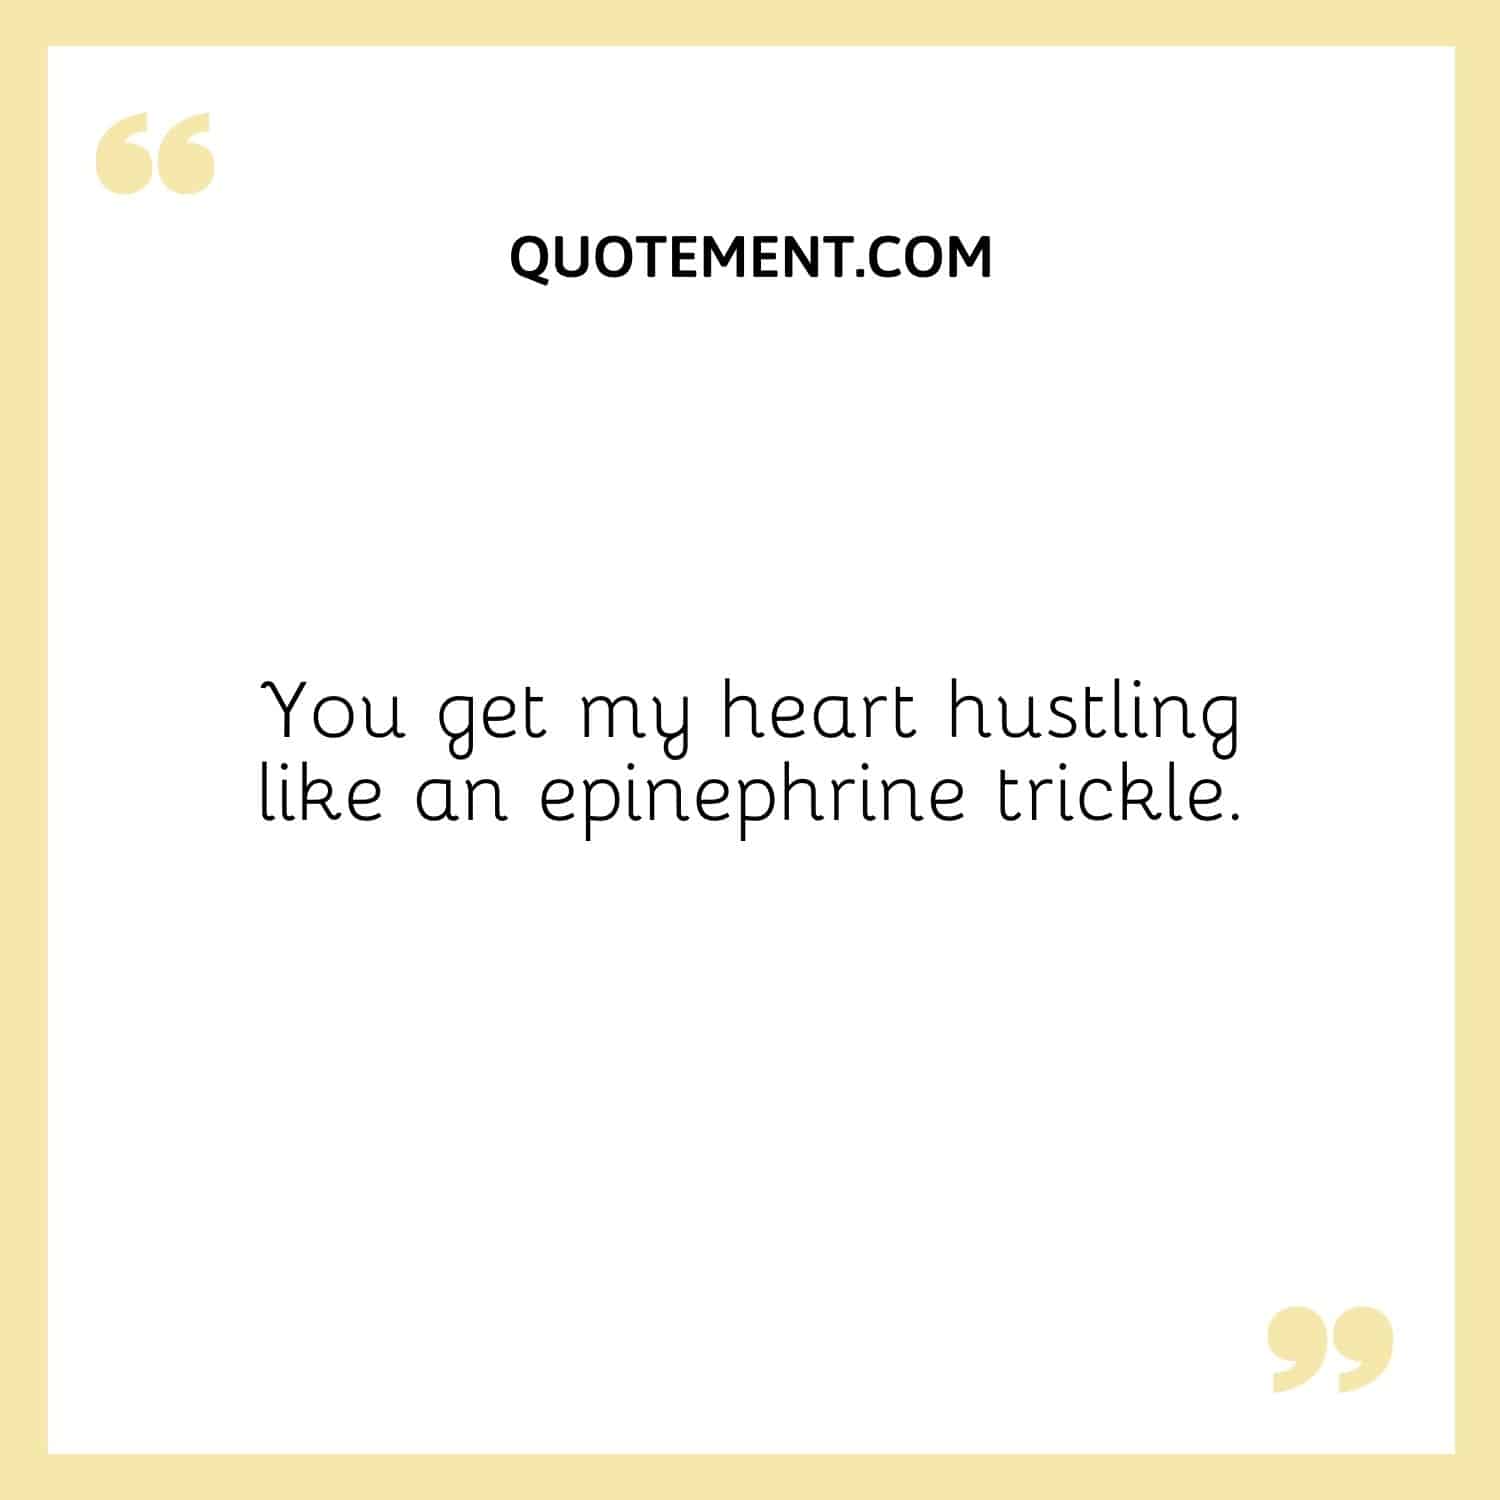 You get my heart hustling like an epinephrine trickle.